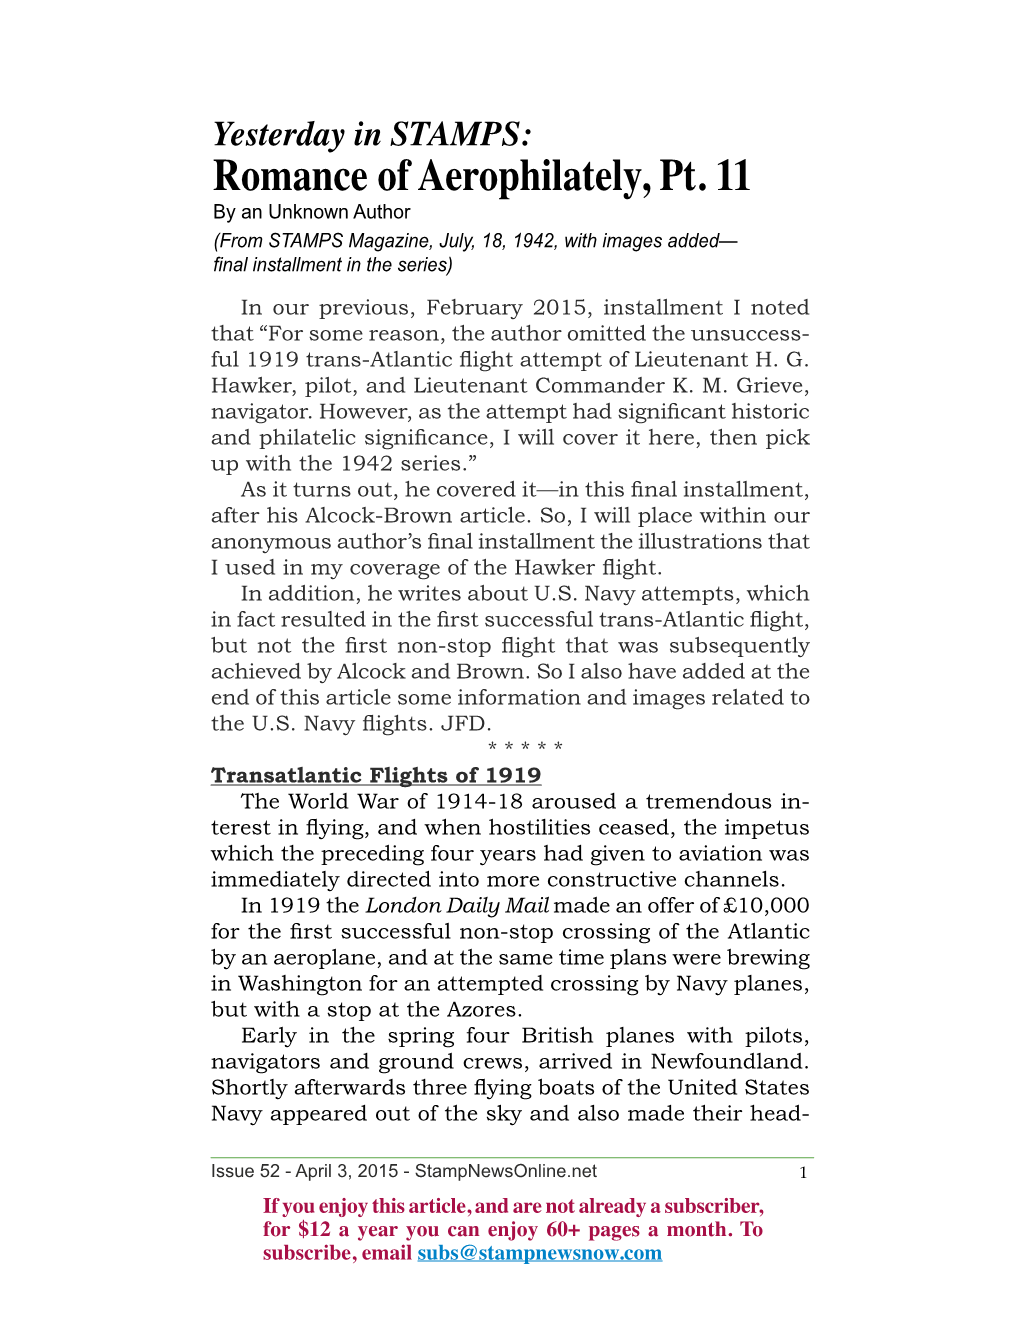 Romance of Aerophilately, Pt. 11